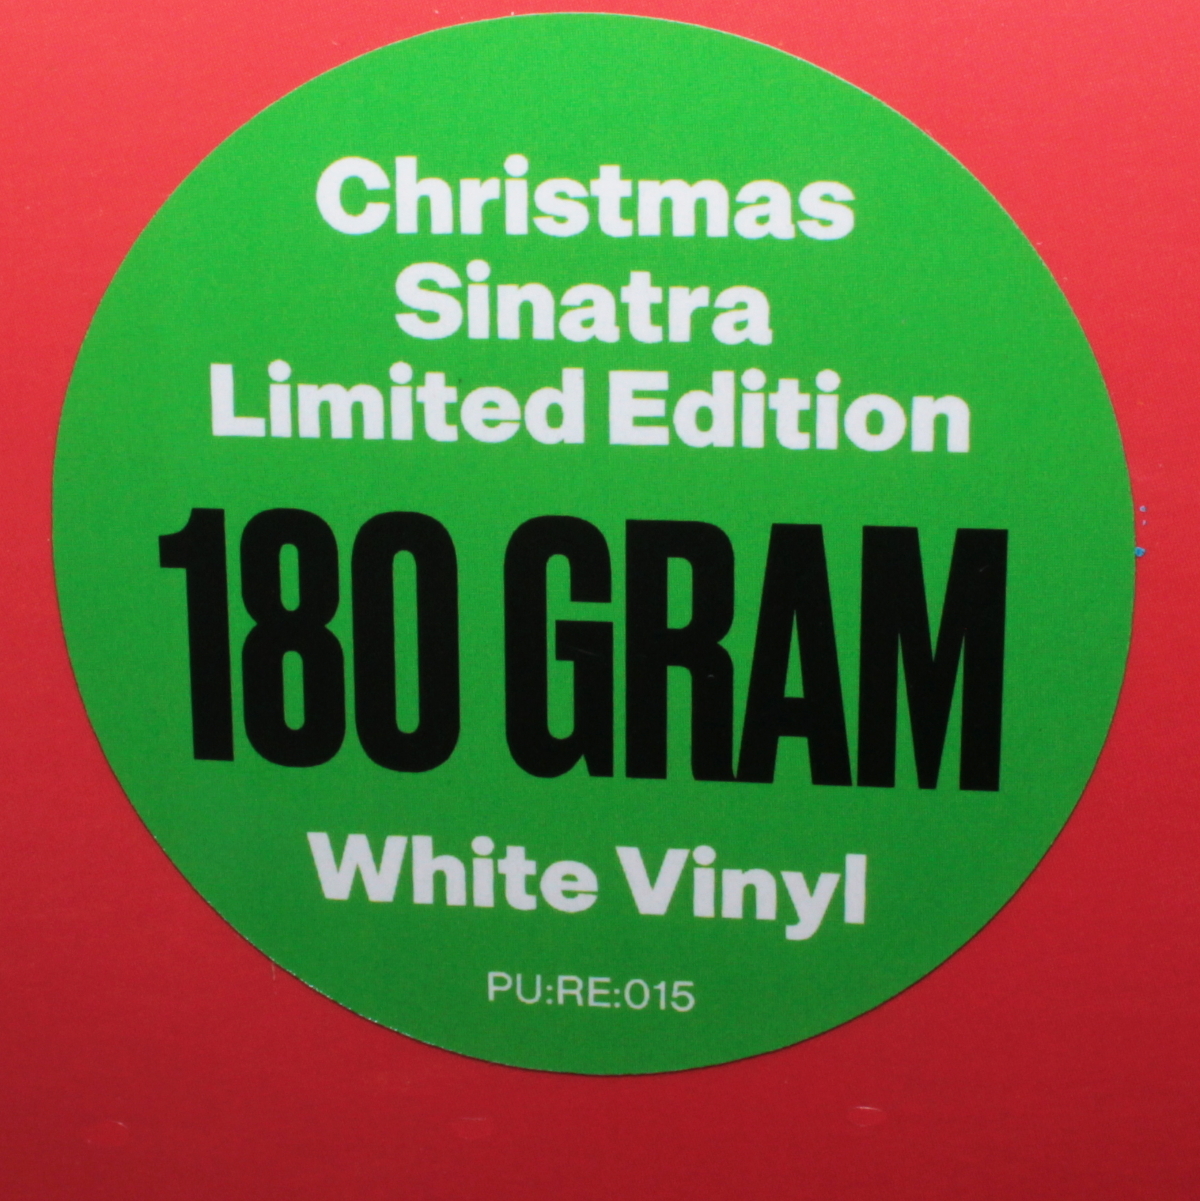 Frank Sinatra - Christmas Sinatra [White Vinyl] (PU:RE:015)